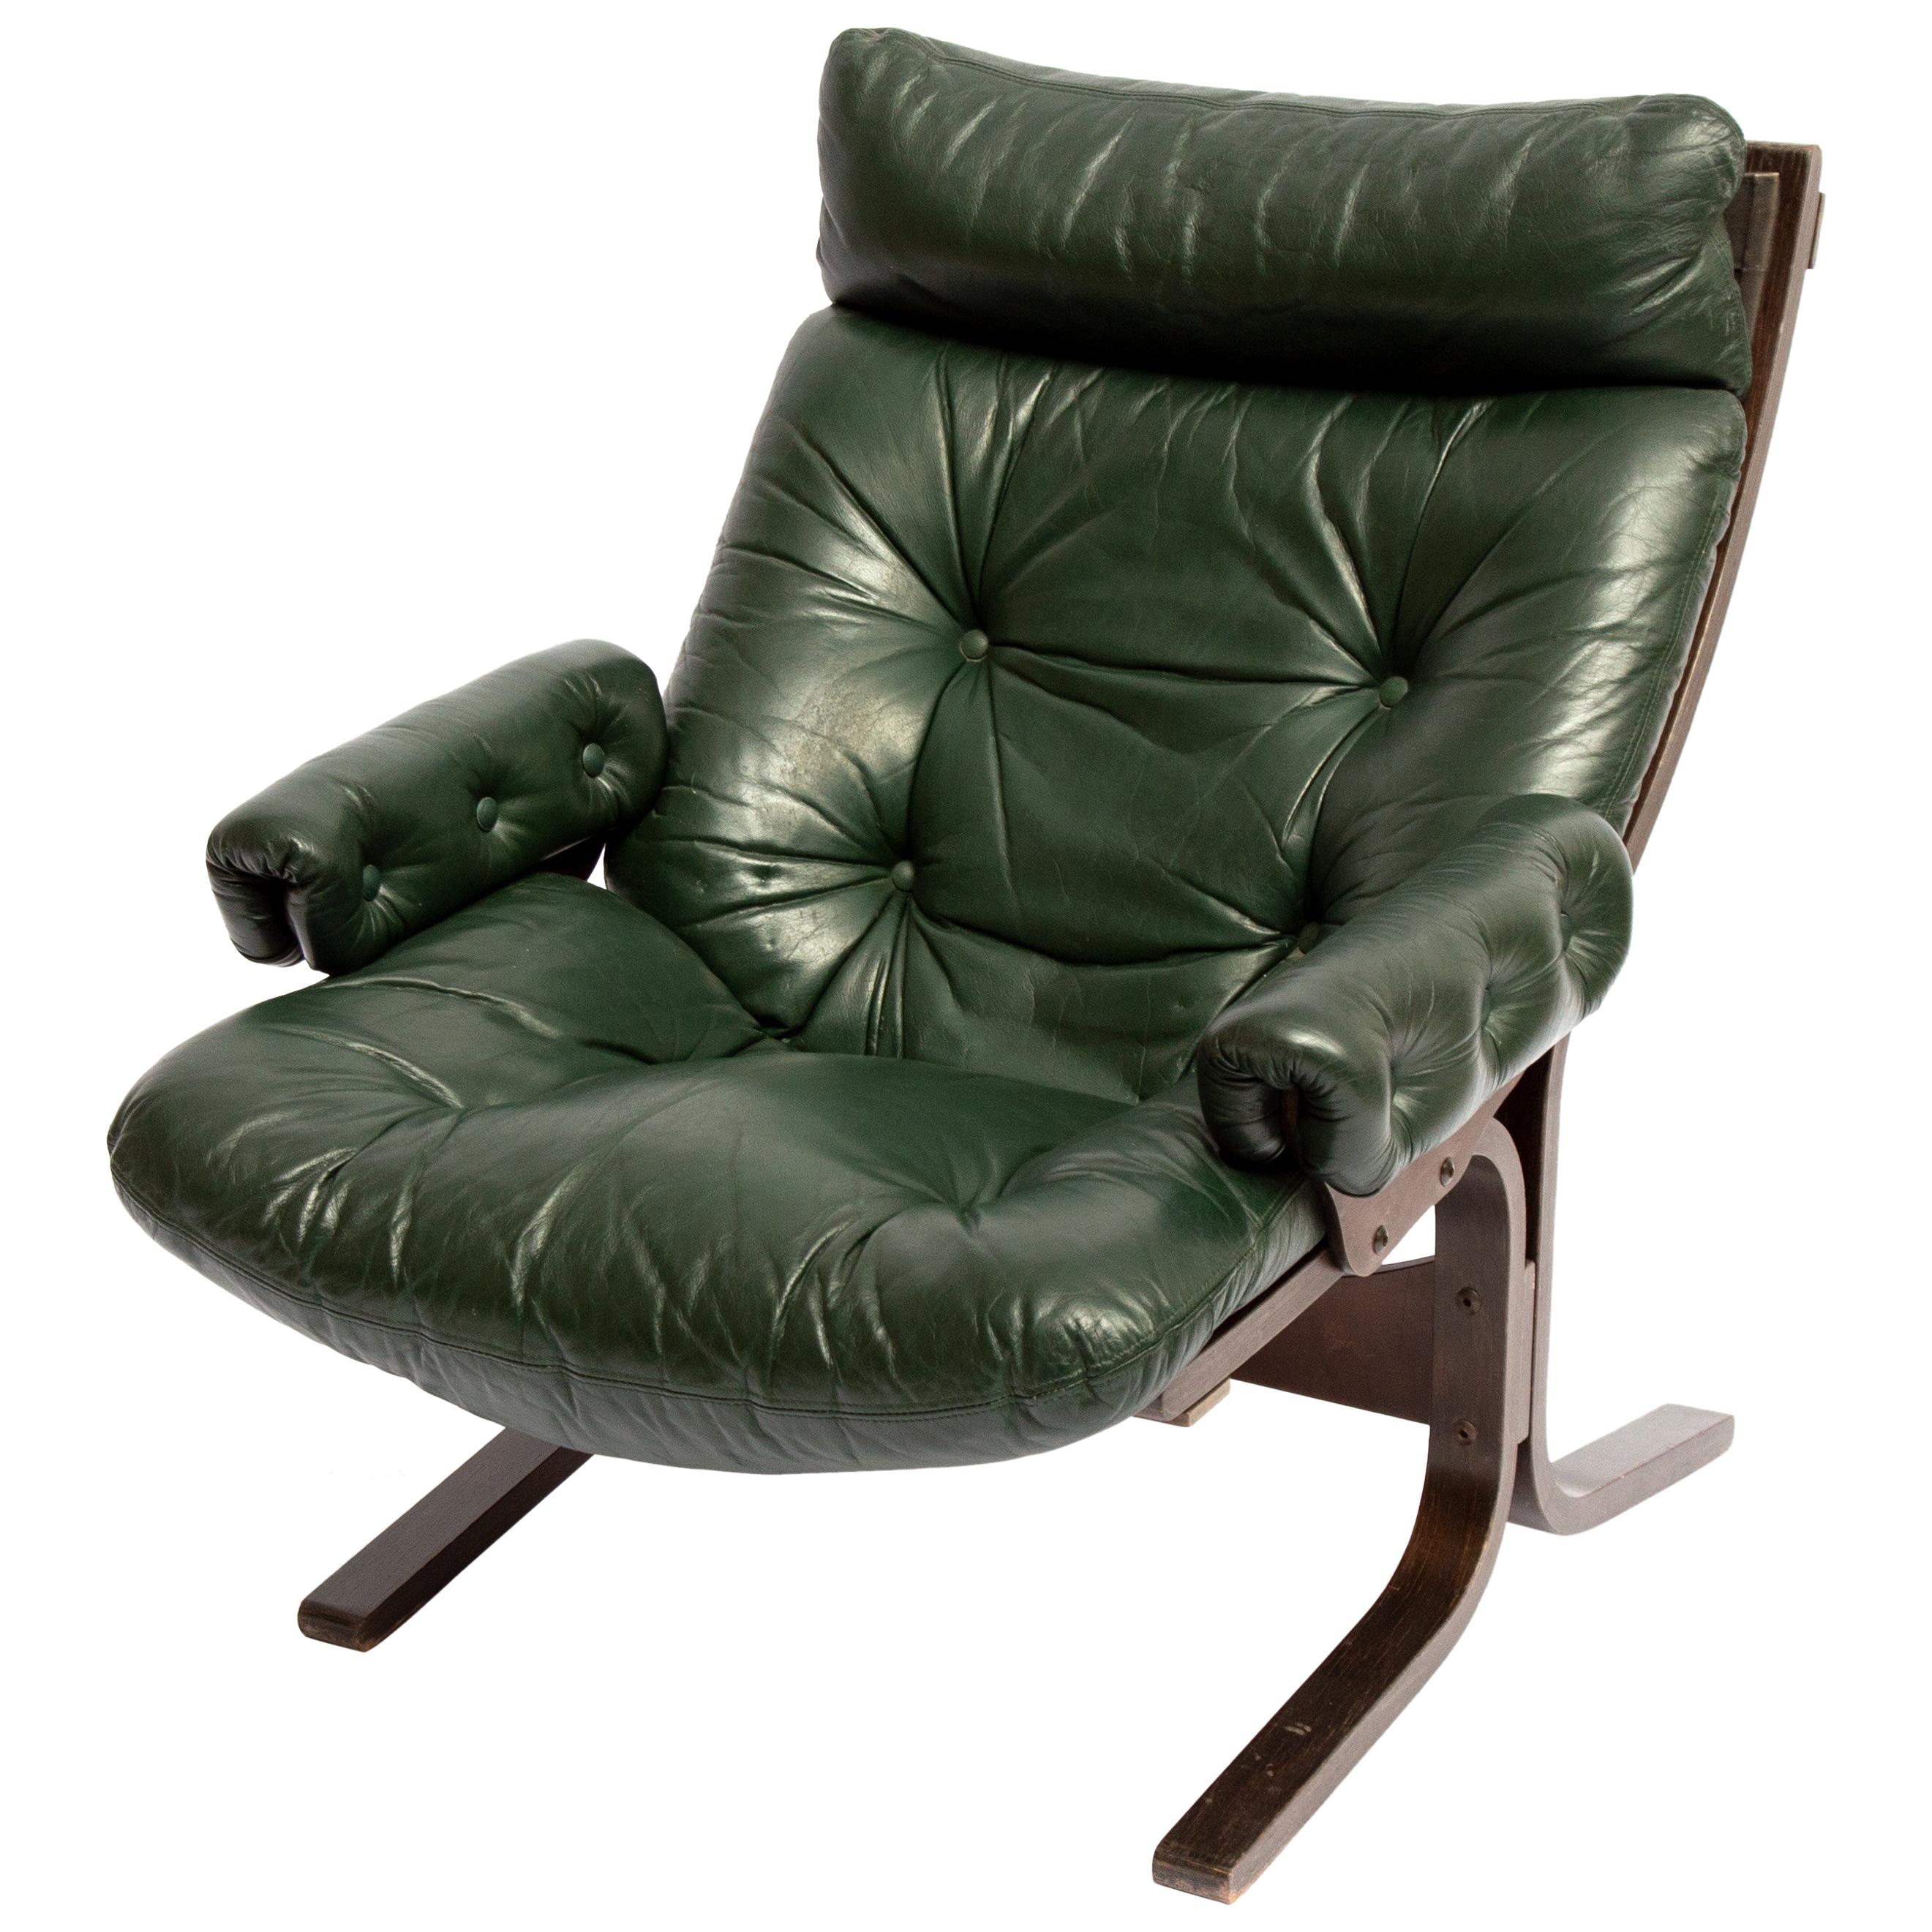 Midcentury Danish Modern Green Leather Slipper Lounge Chair